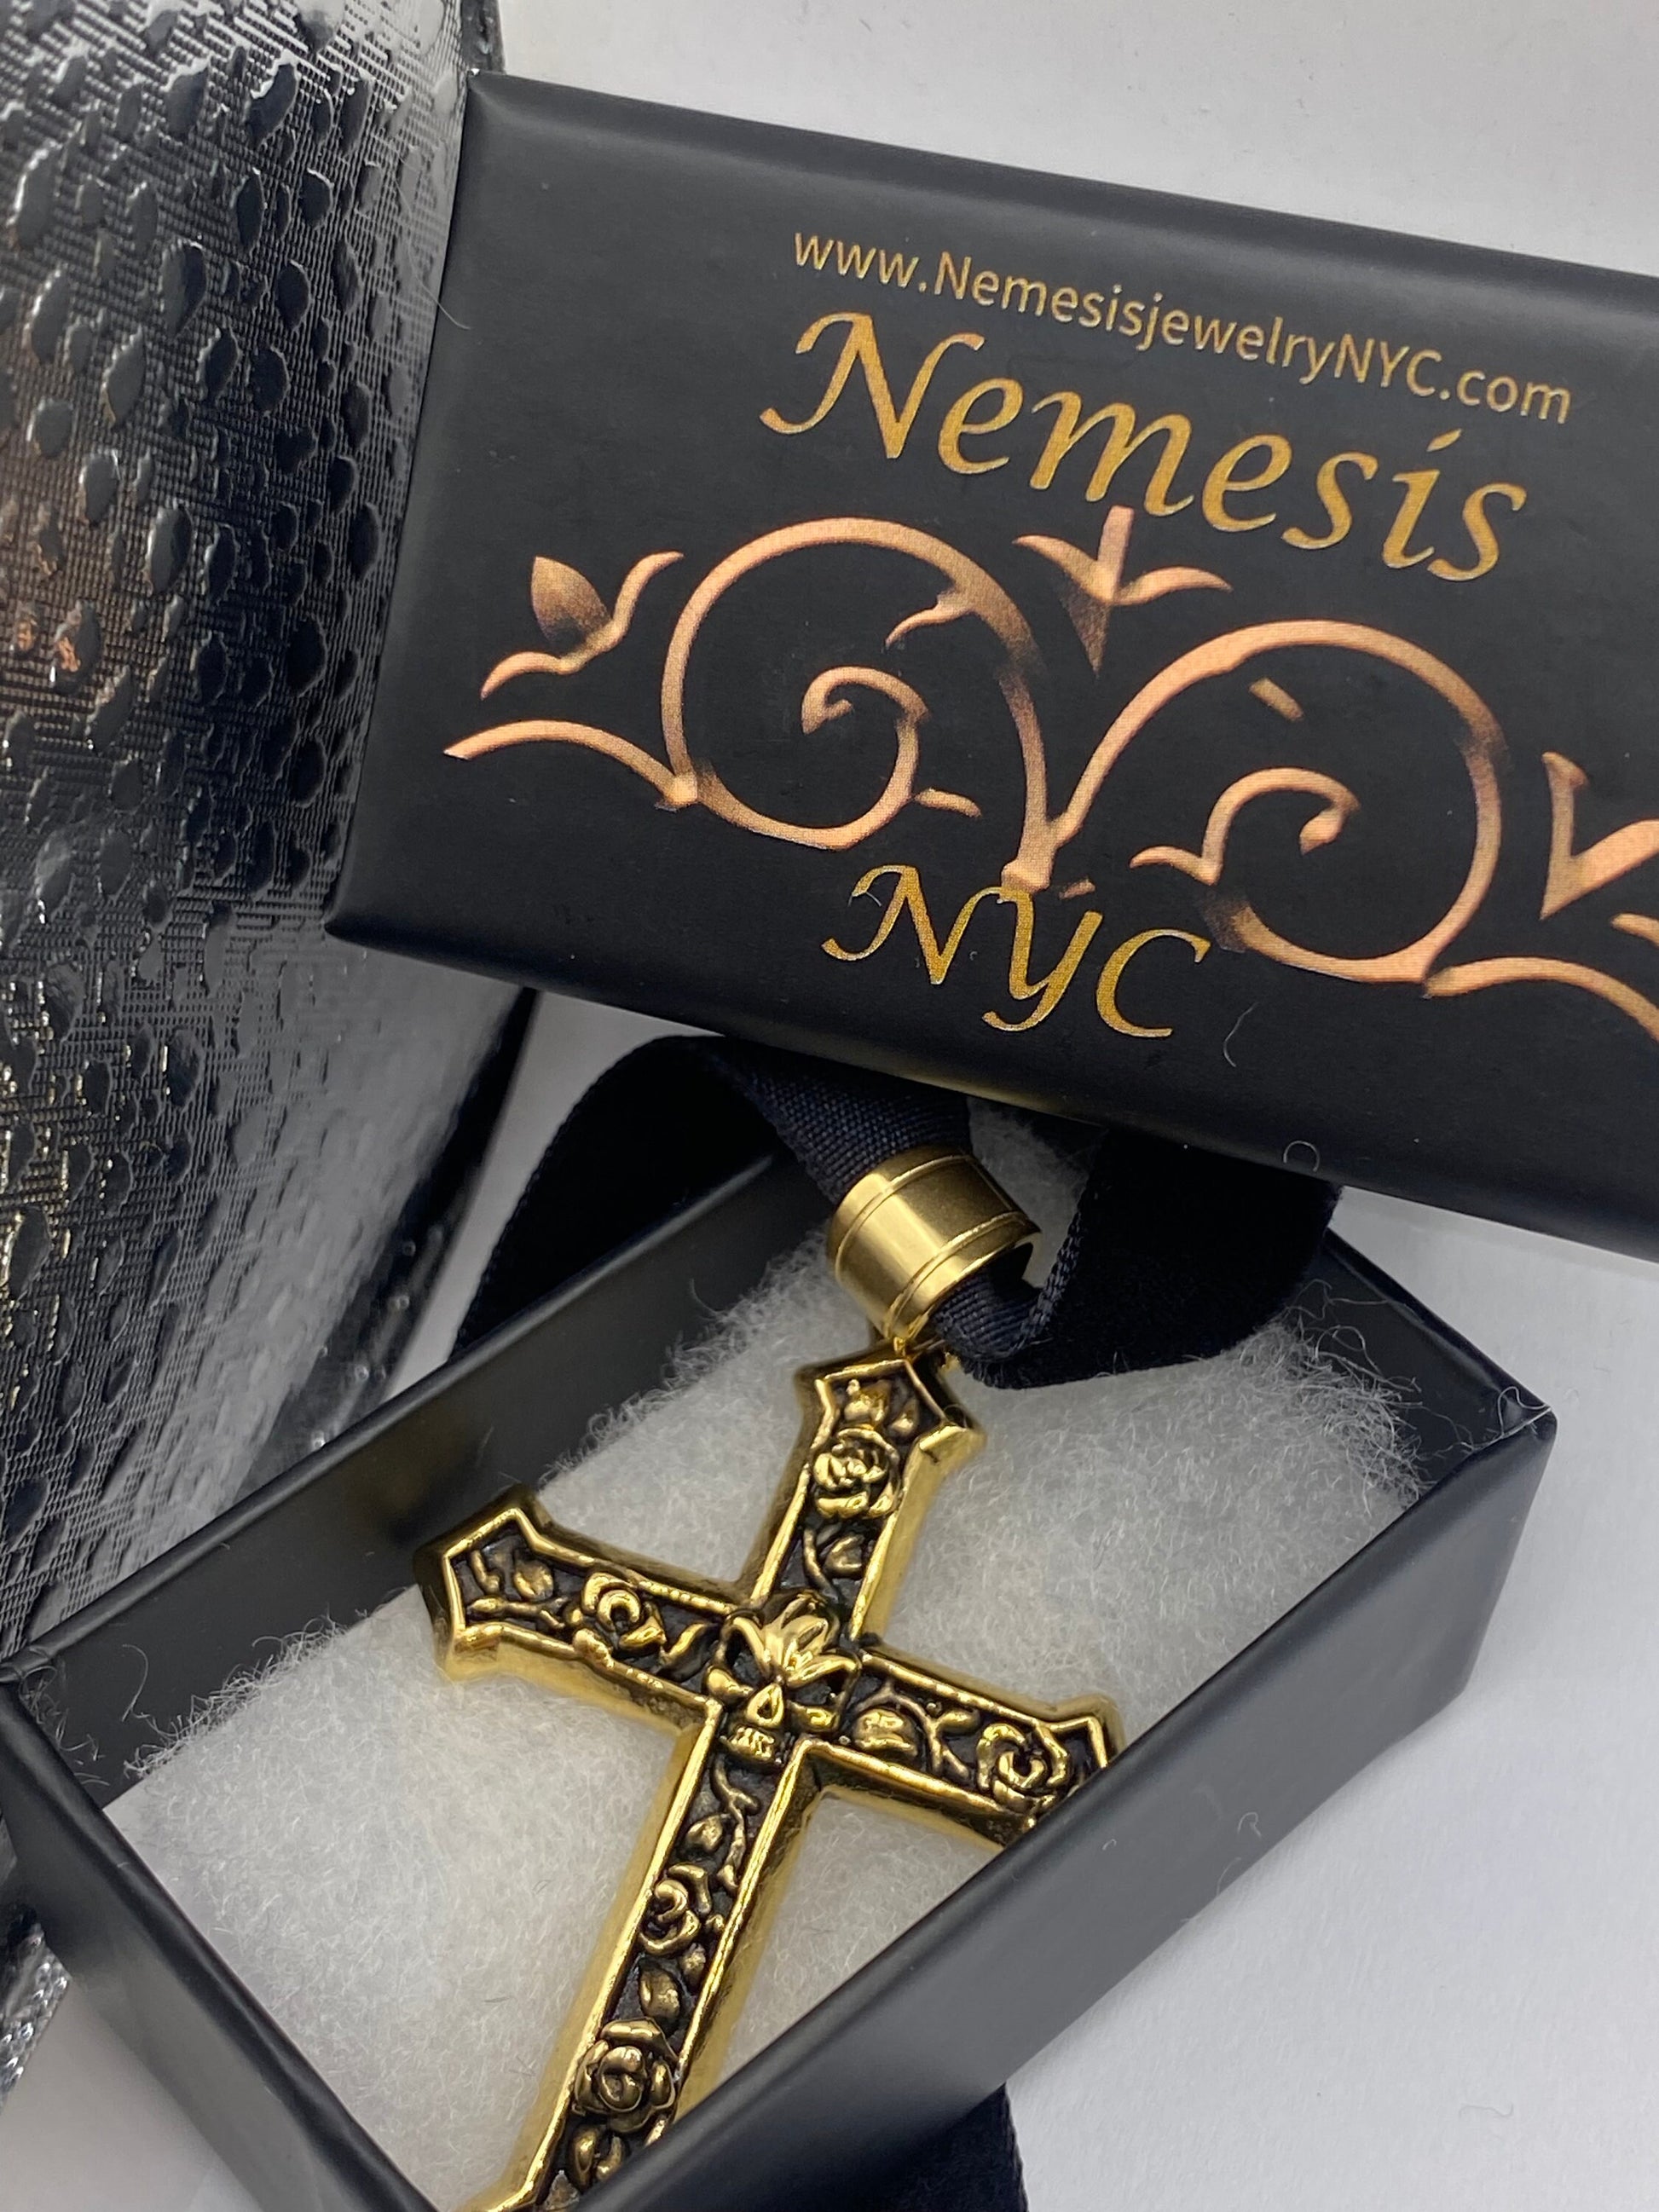 Vintage Skull Rose Gold Stainless Steel Cross pendant necklace